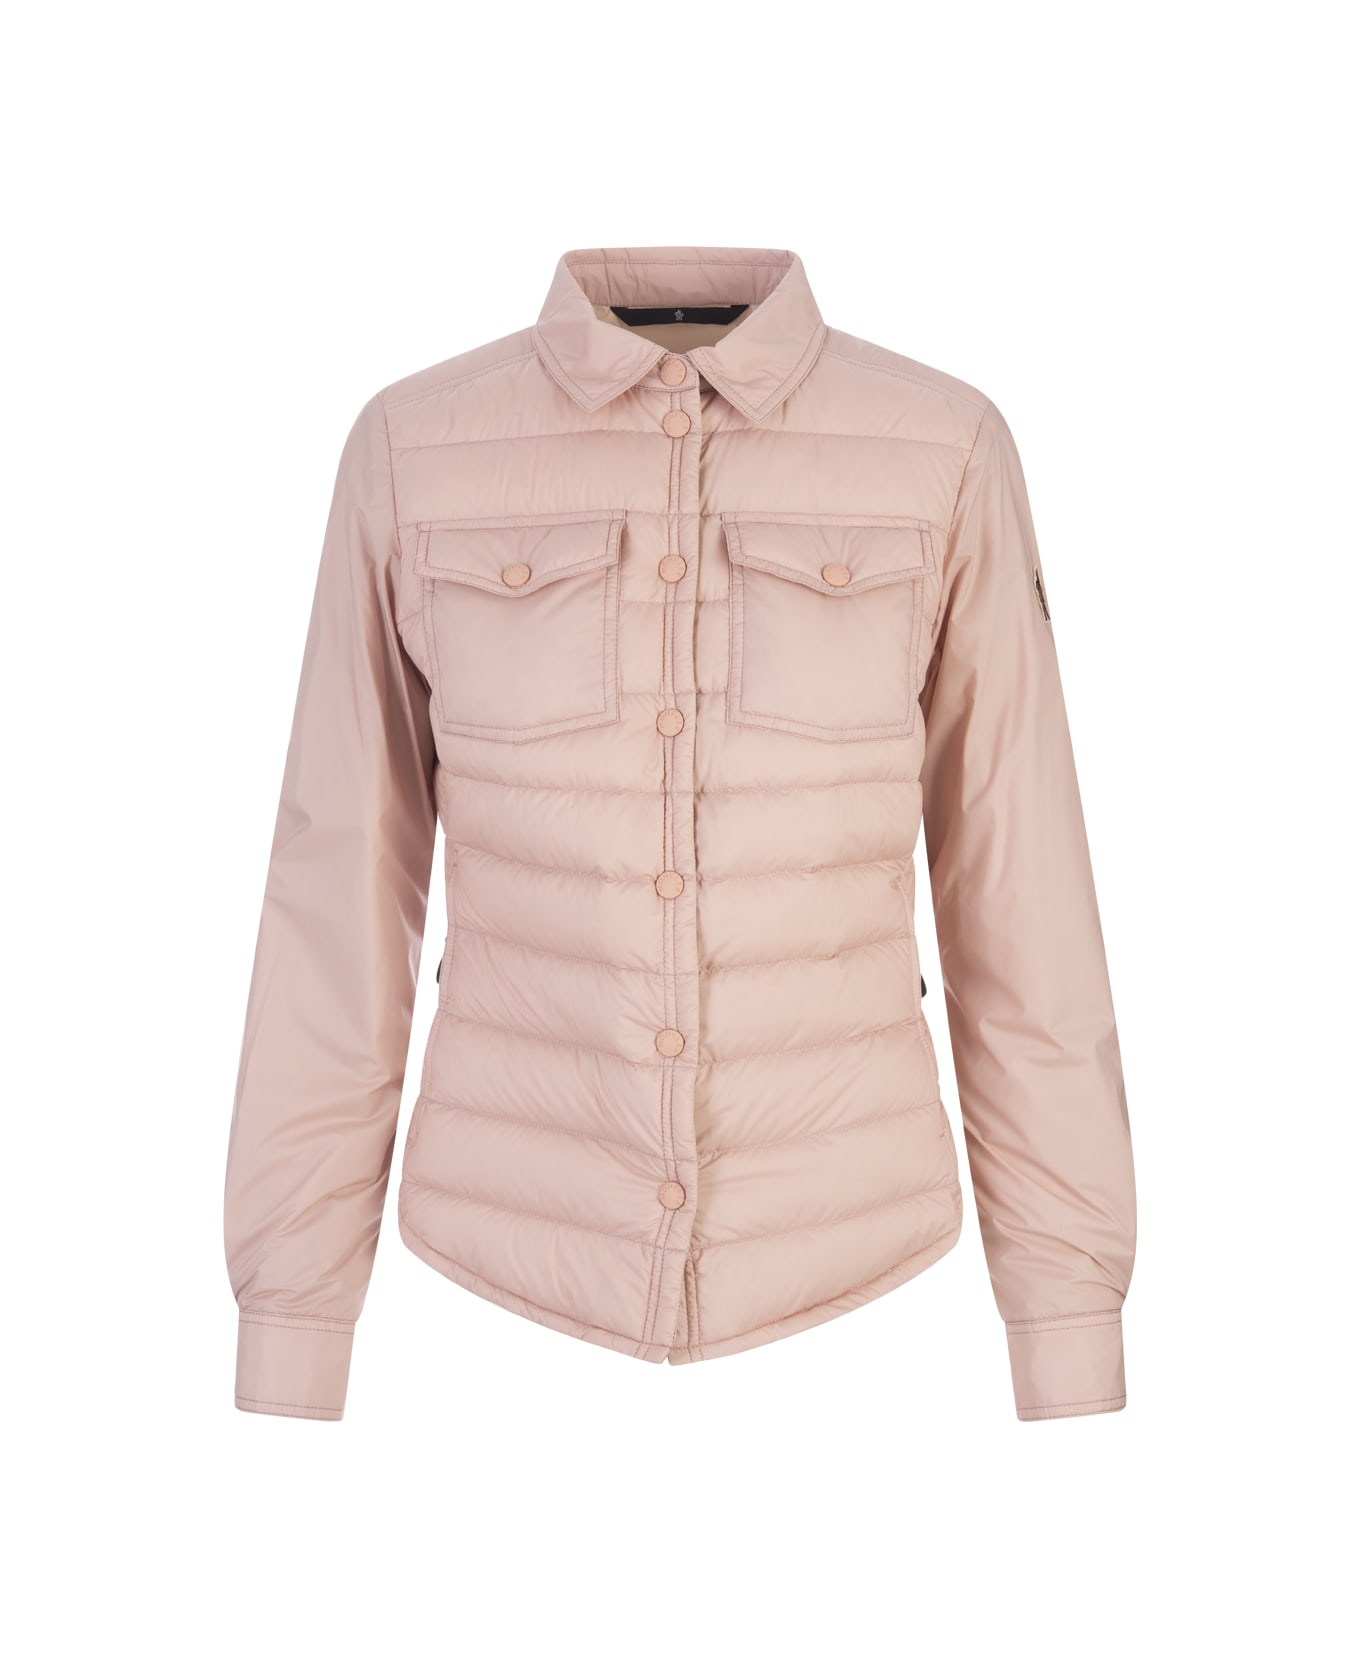 Moncler Grenoble Light Pink Averau Shirt Jacket - Pink